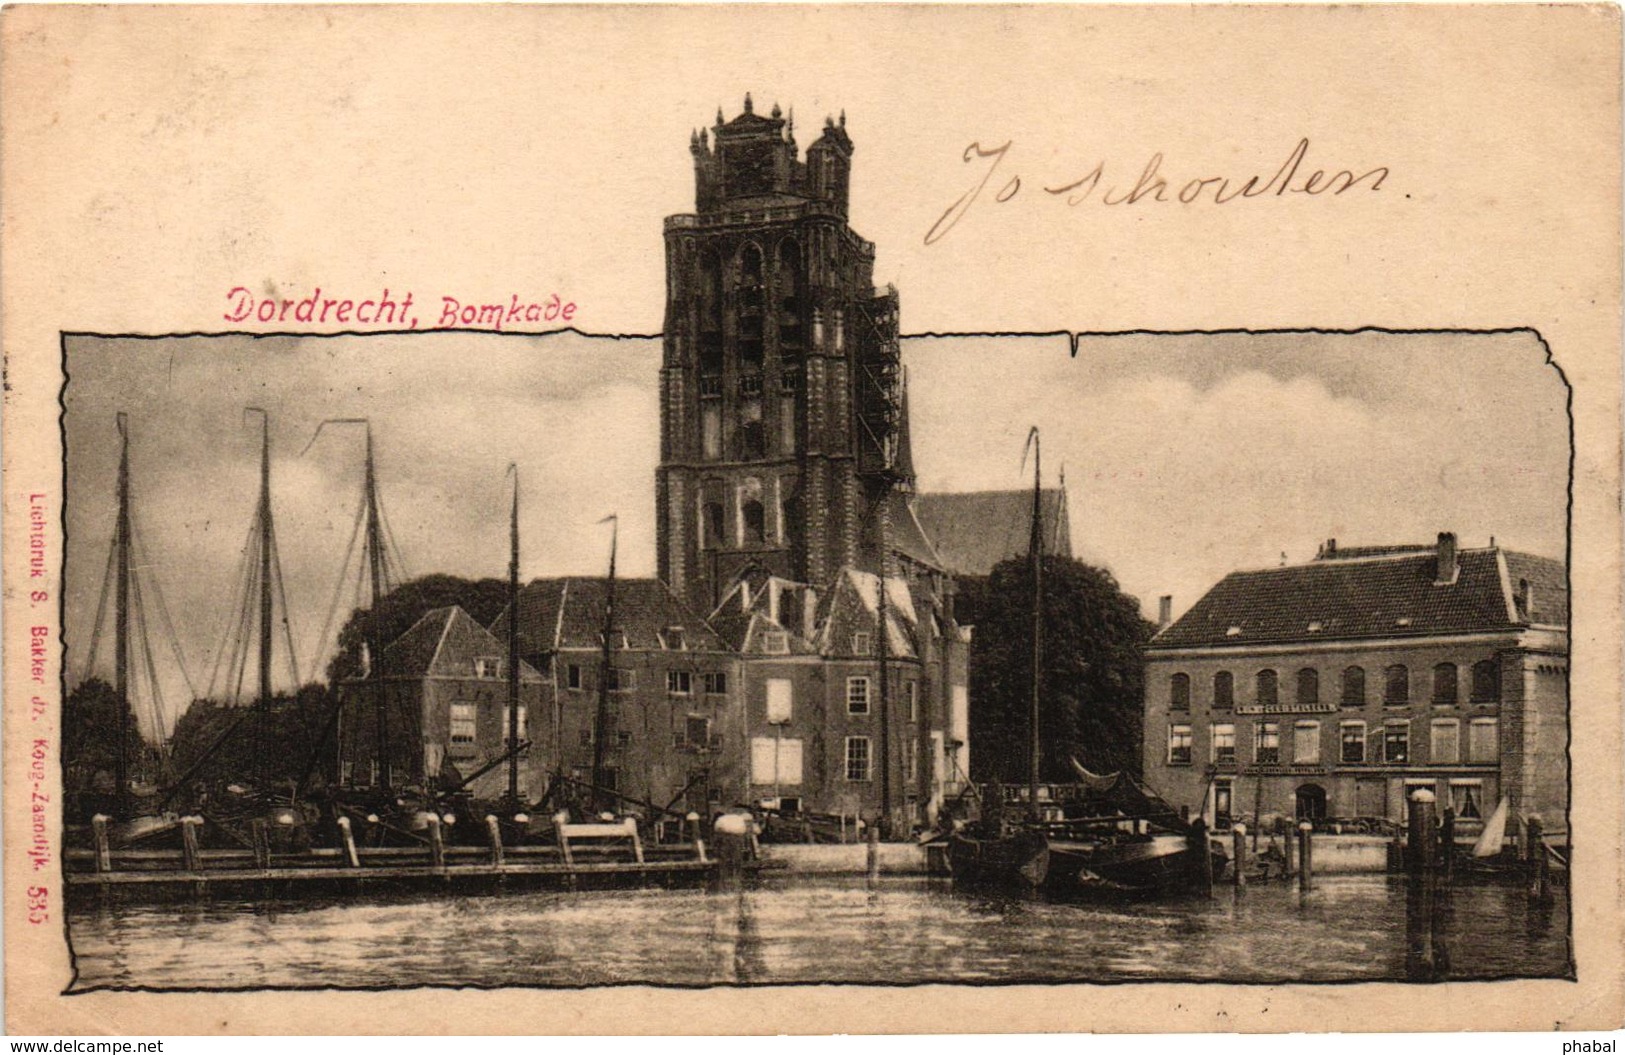 The Netherlands, Dordrecht, Bomkade, Old Postcard 1900 - Dordrecht